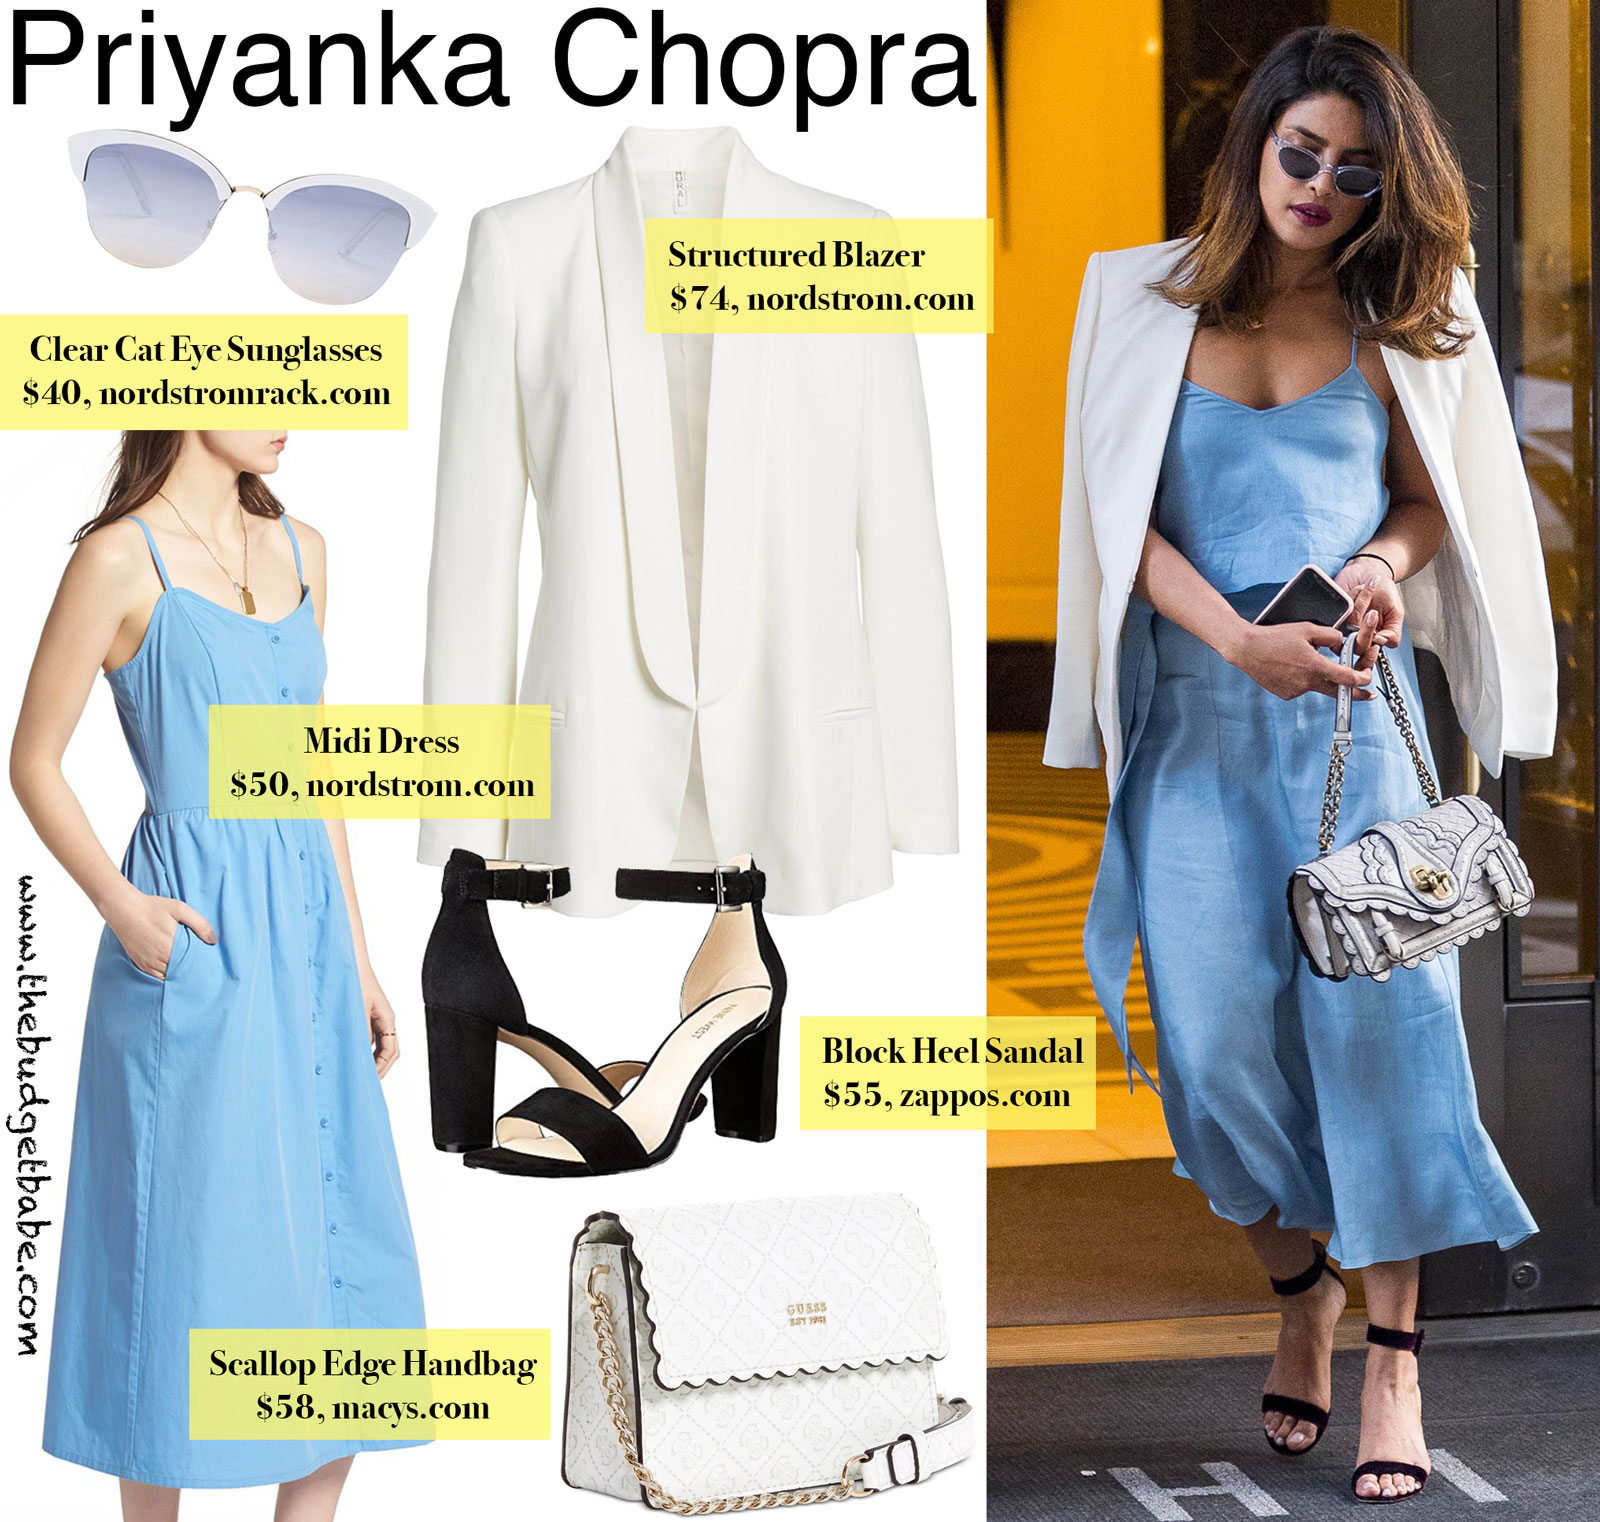 Priyanka Chopra Blue Dress and Scallop Handbag Look for Less